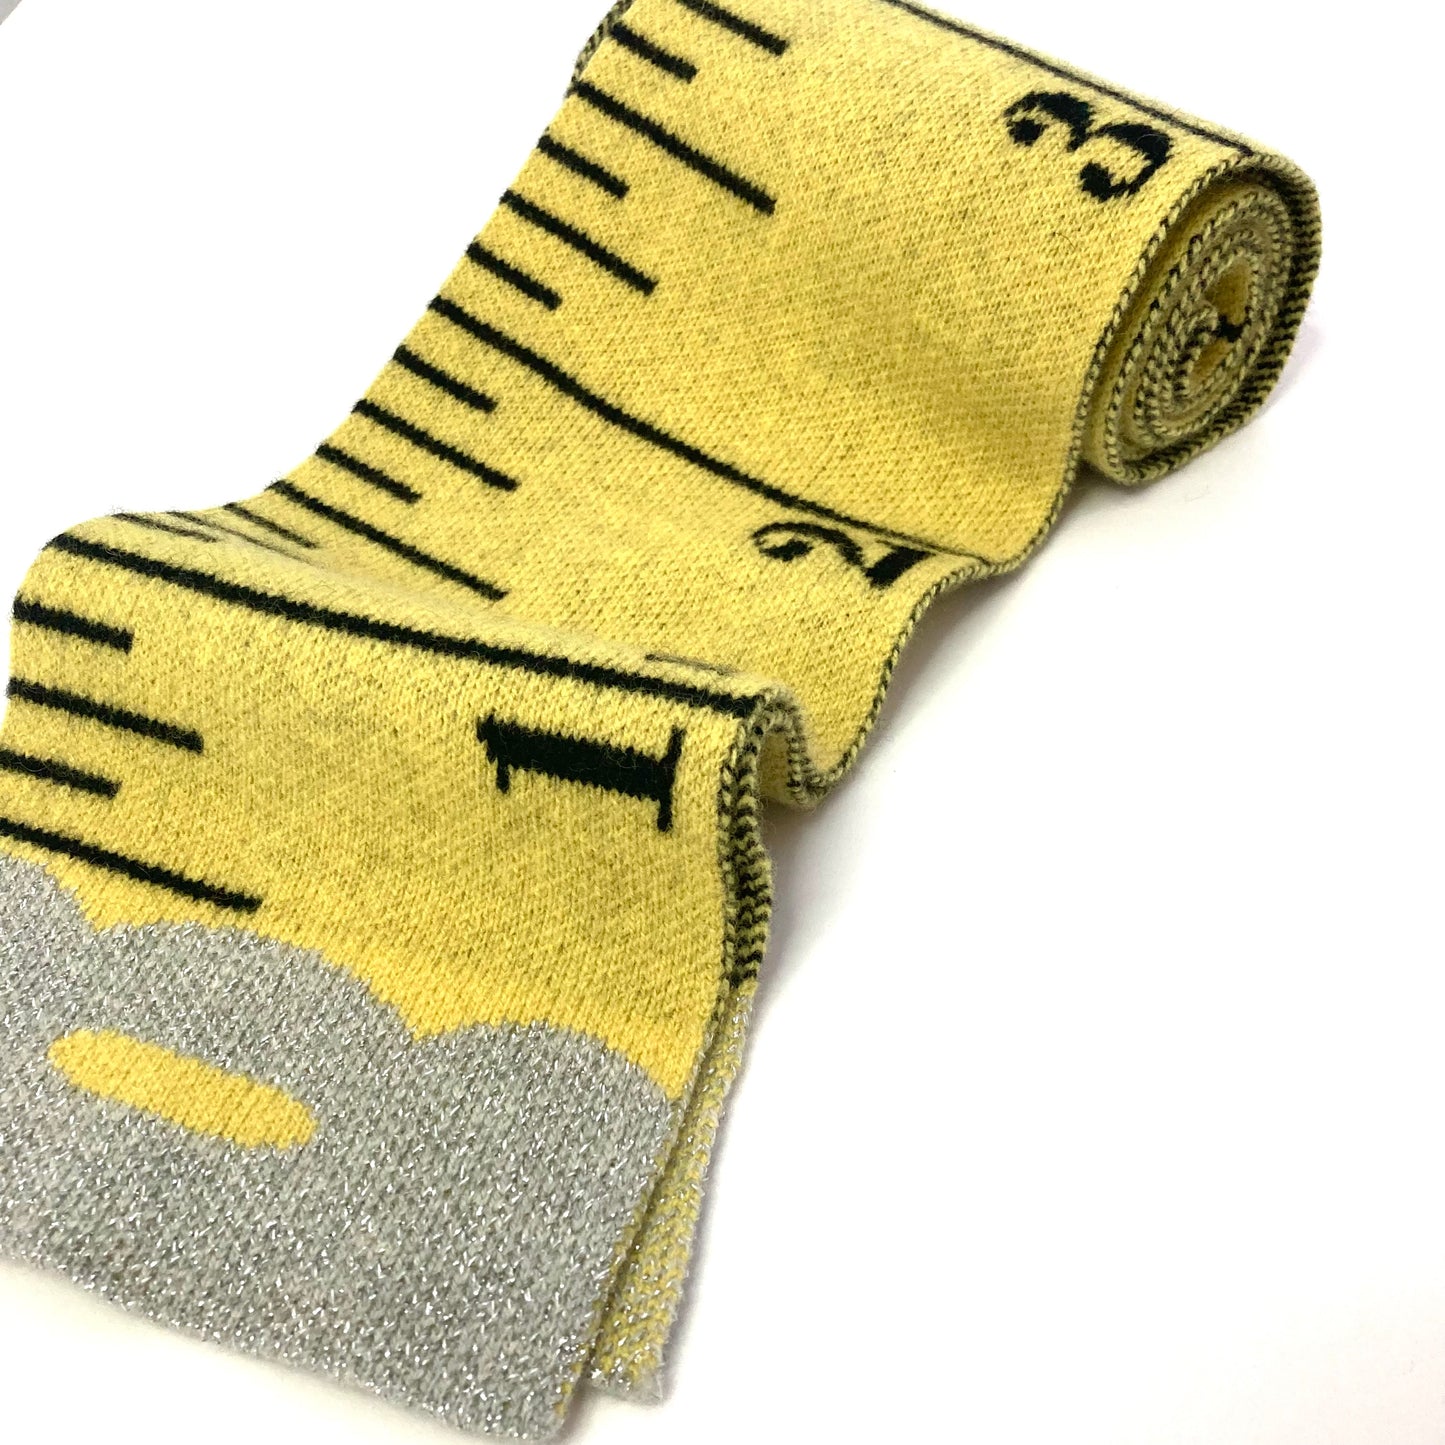 Tape Measure scarf - YELLOW